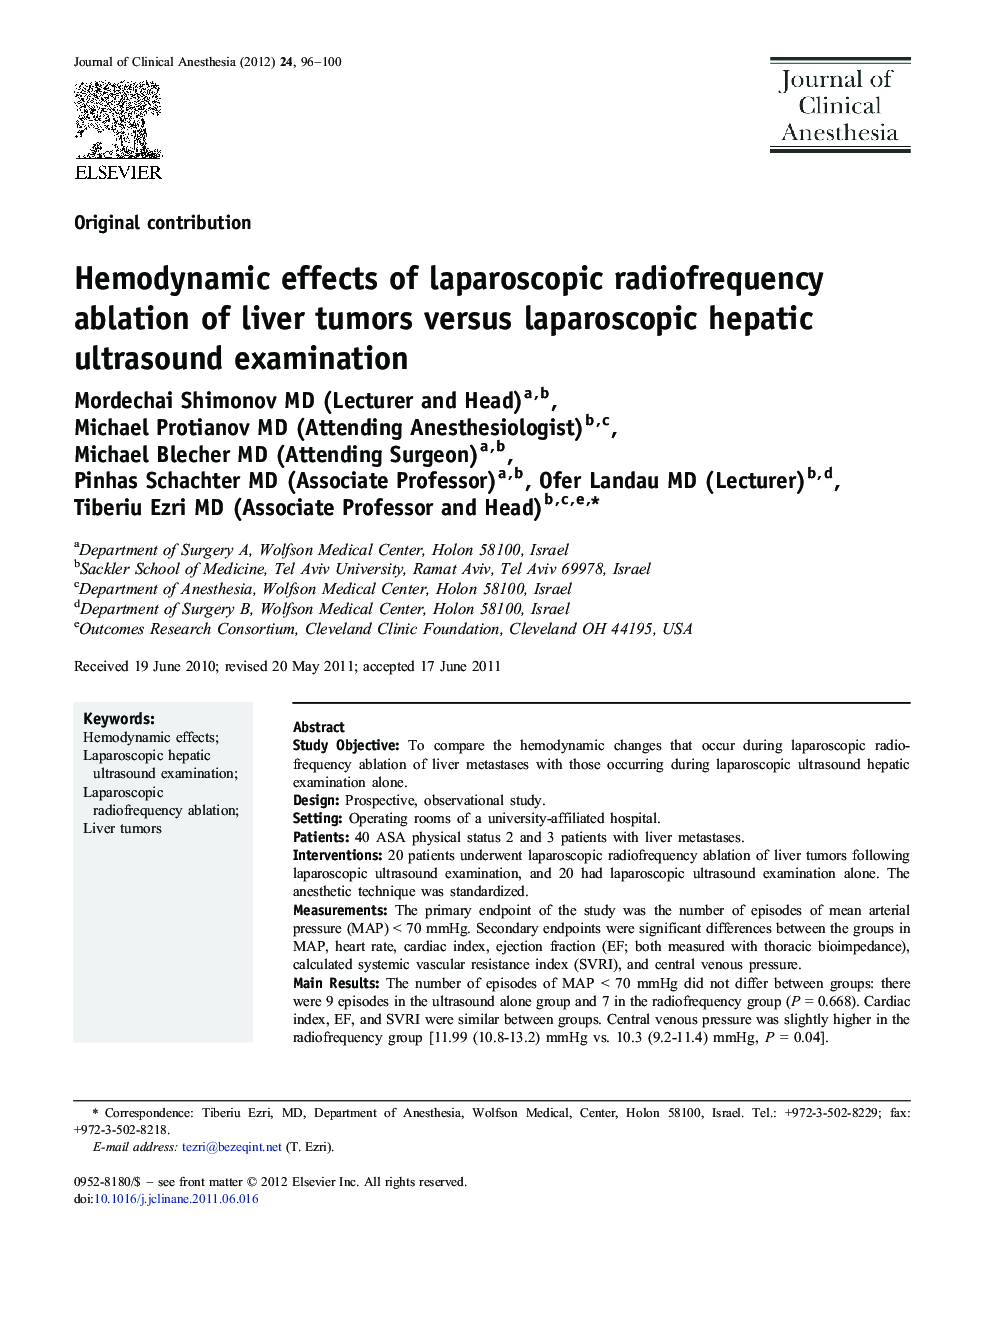 Hemodynamic effects of laparoscopic radiofrequency ablation of liver tumors versus laparoscopic hepatic ultrasound examination